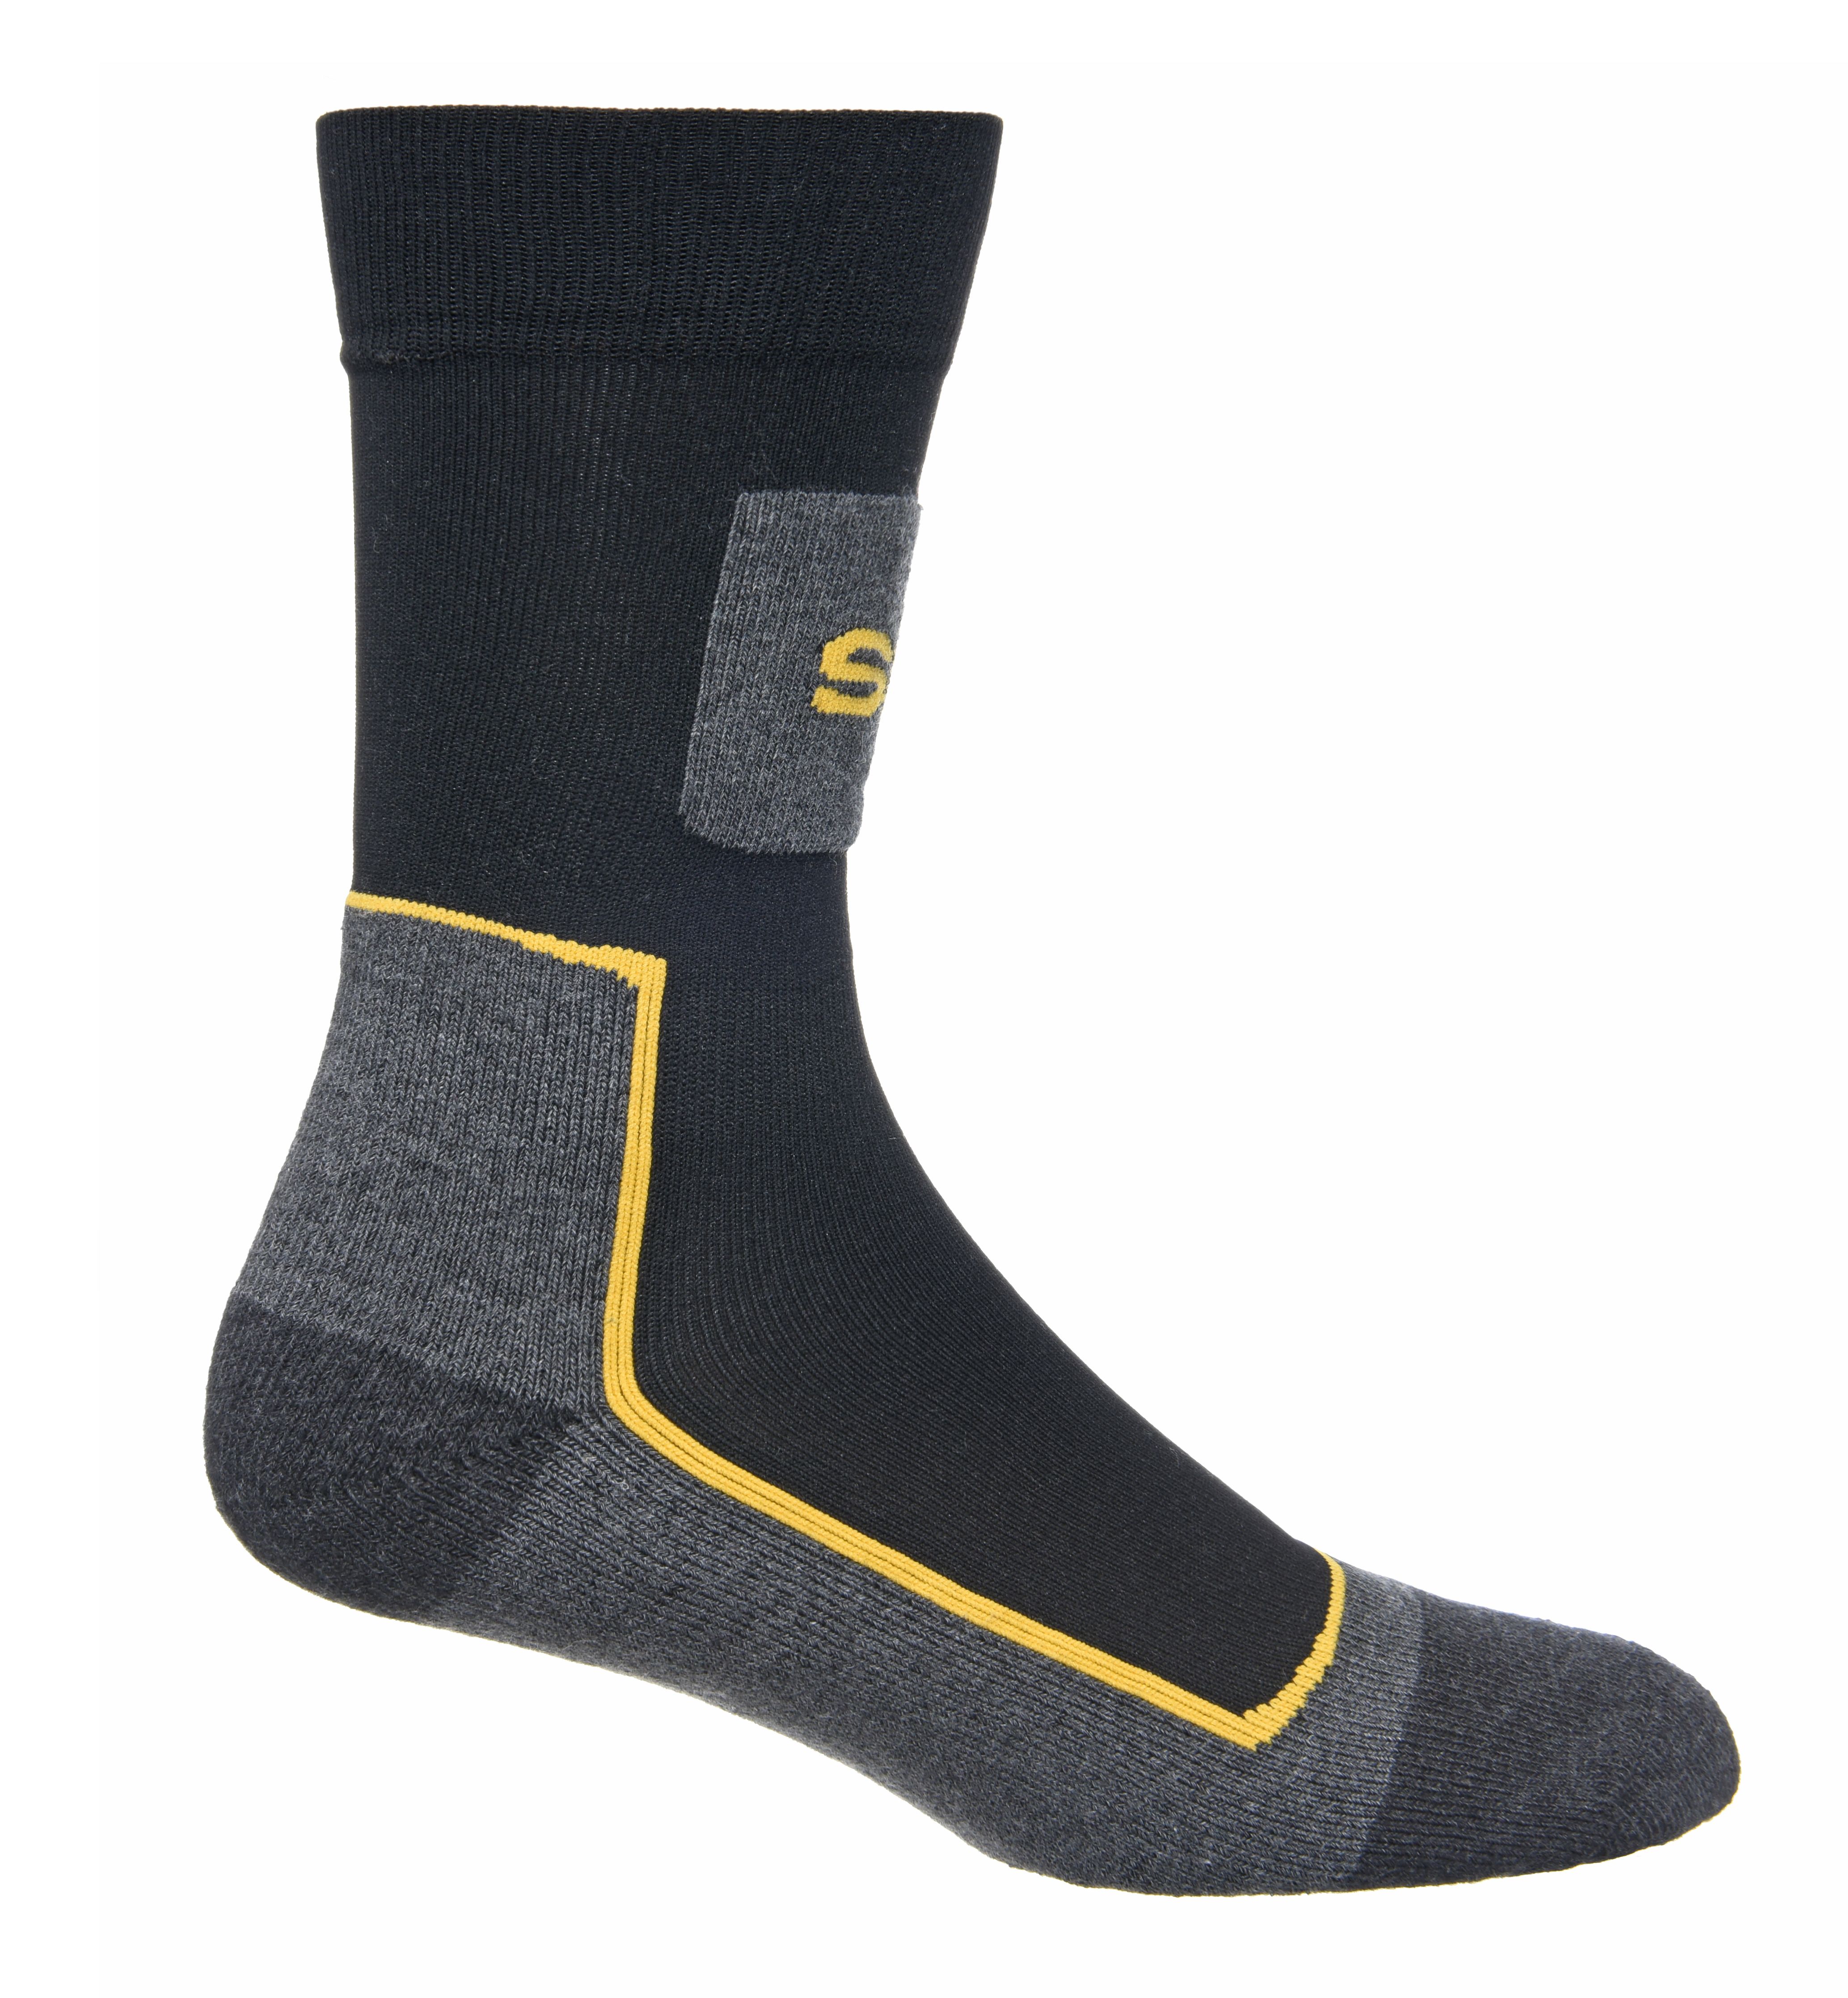 Black & grey Socks Size 7-11, 3 Sets | DIY at B&Q